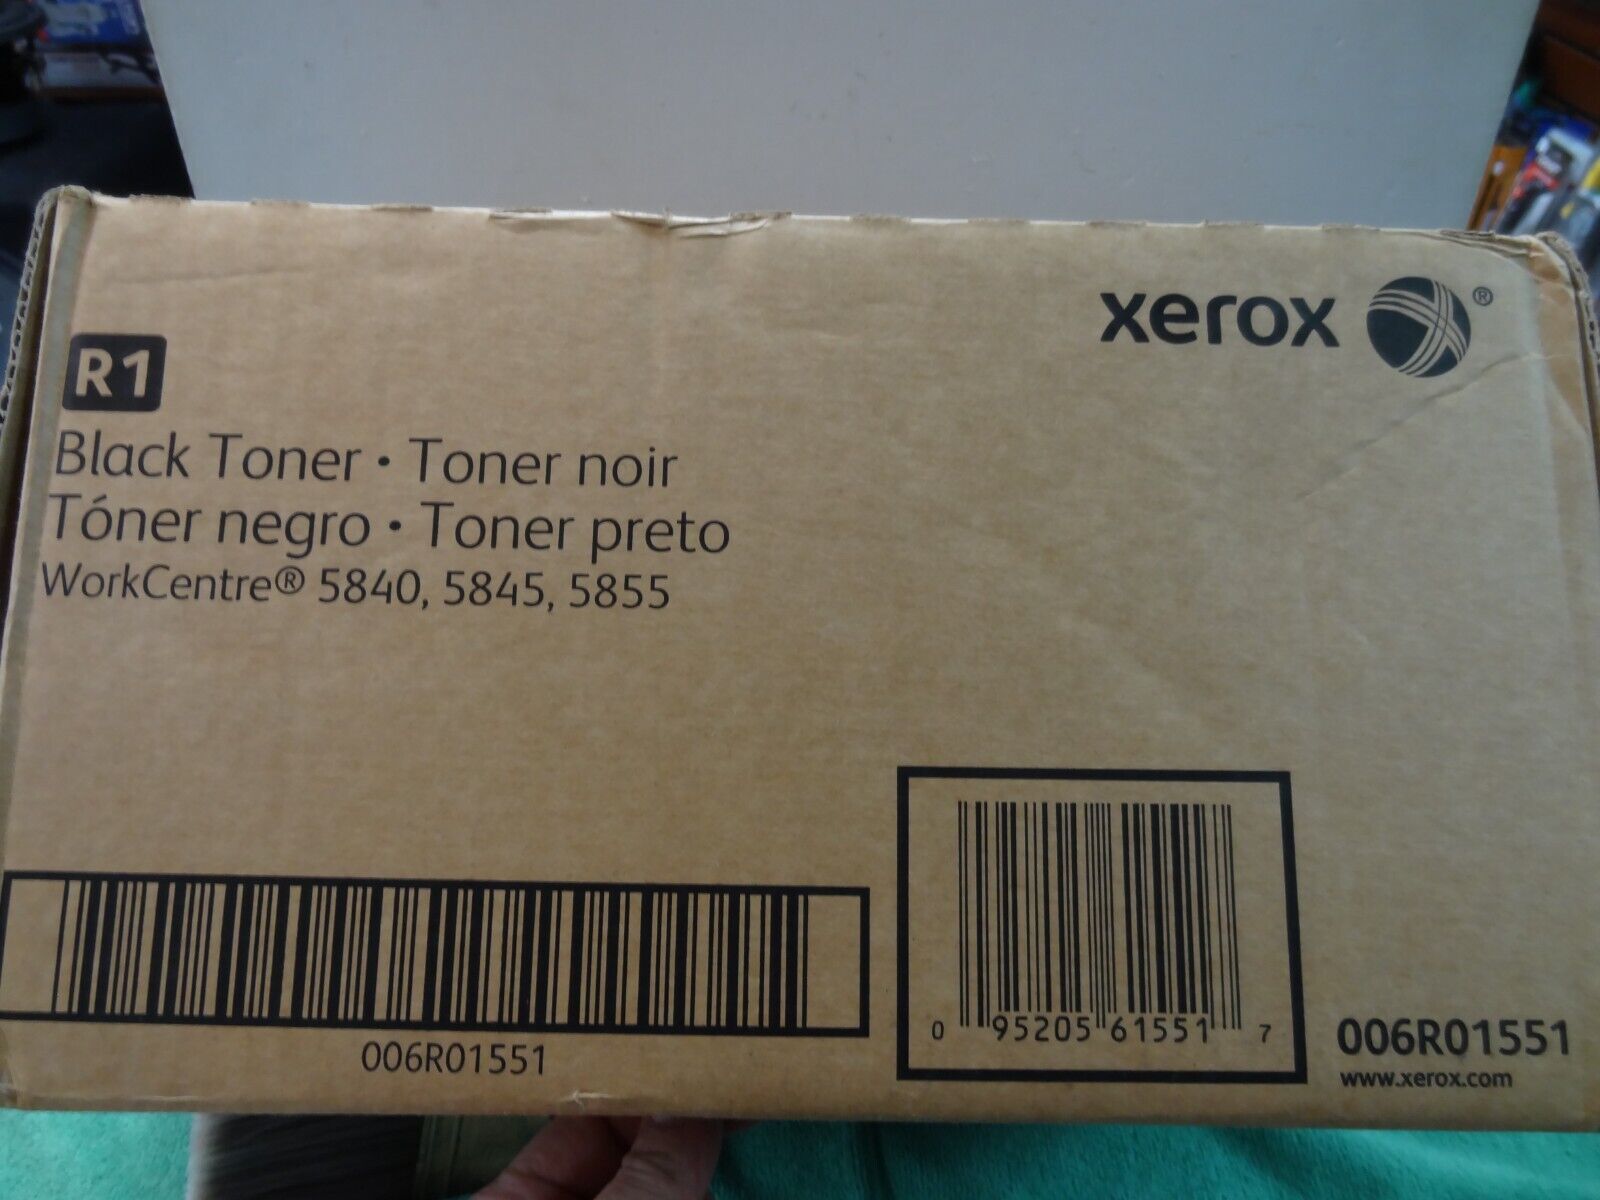 Xerox 006R01551 WorkCentre R1 Black Toner (1 Toners + Waste Cartridge) Authentic